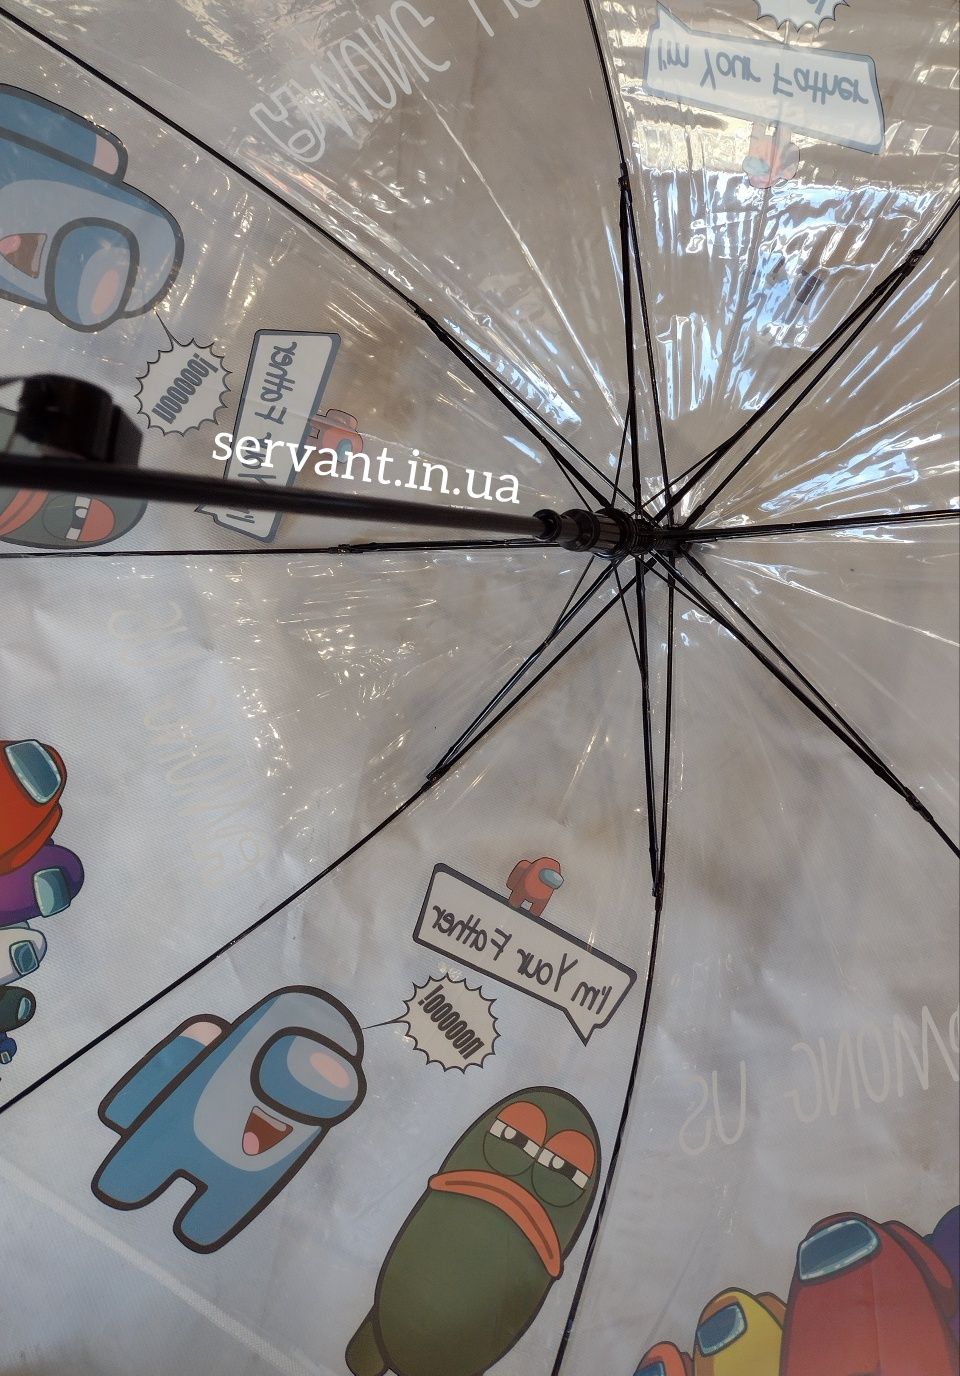 Зонтик Among US Аманг ас зонт детский Зонт для мальчика Зонт.